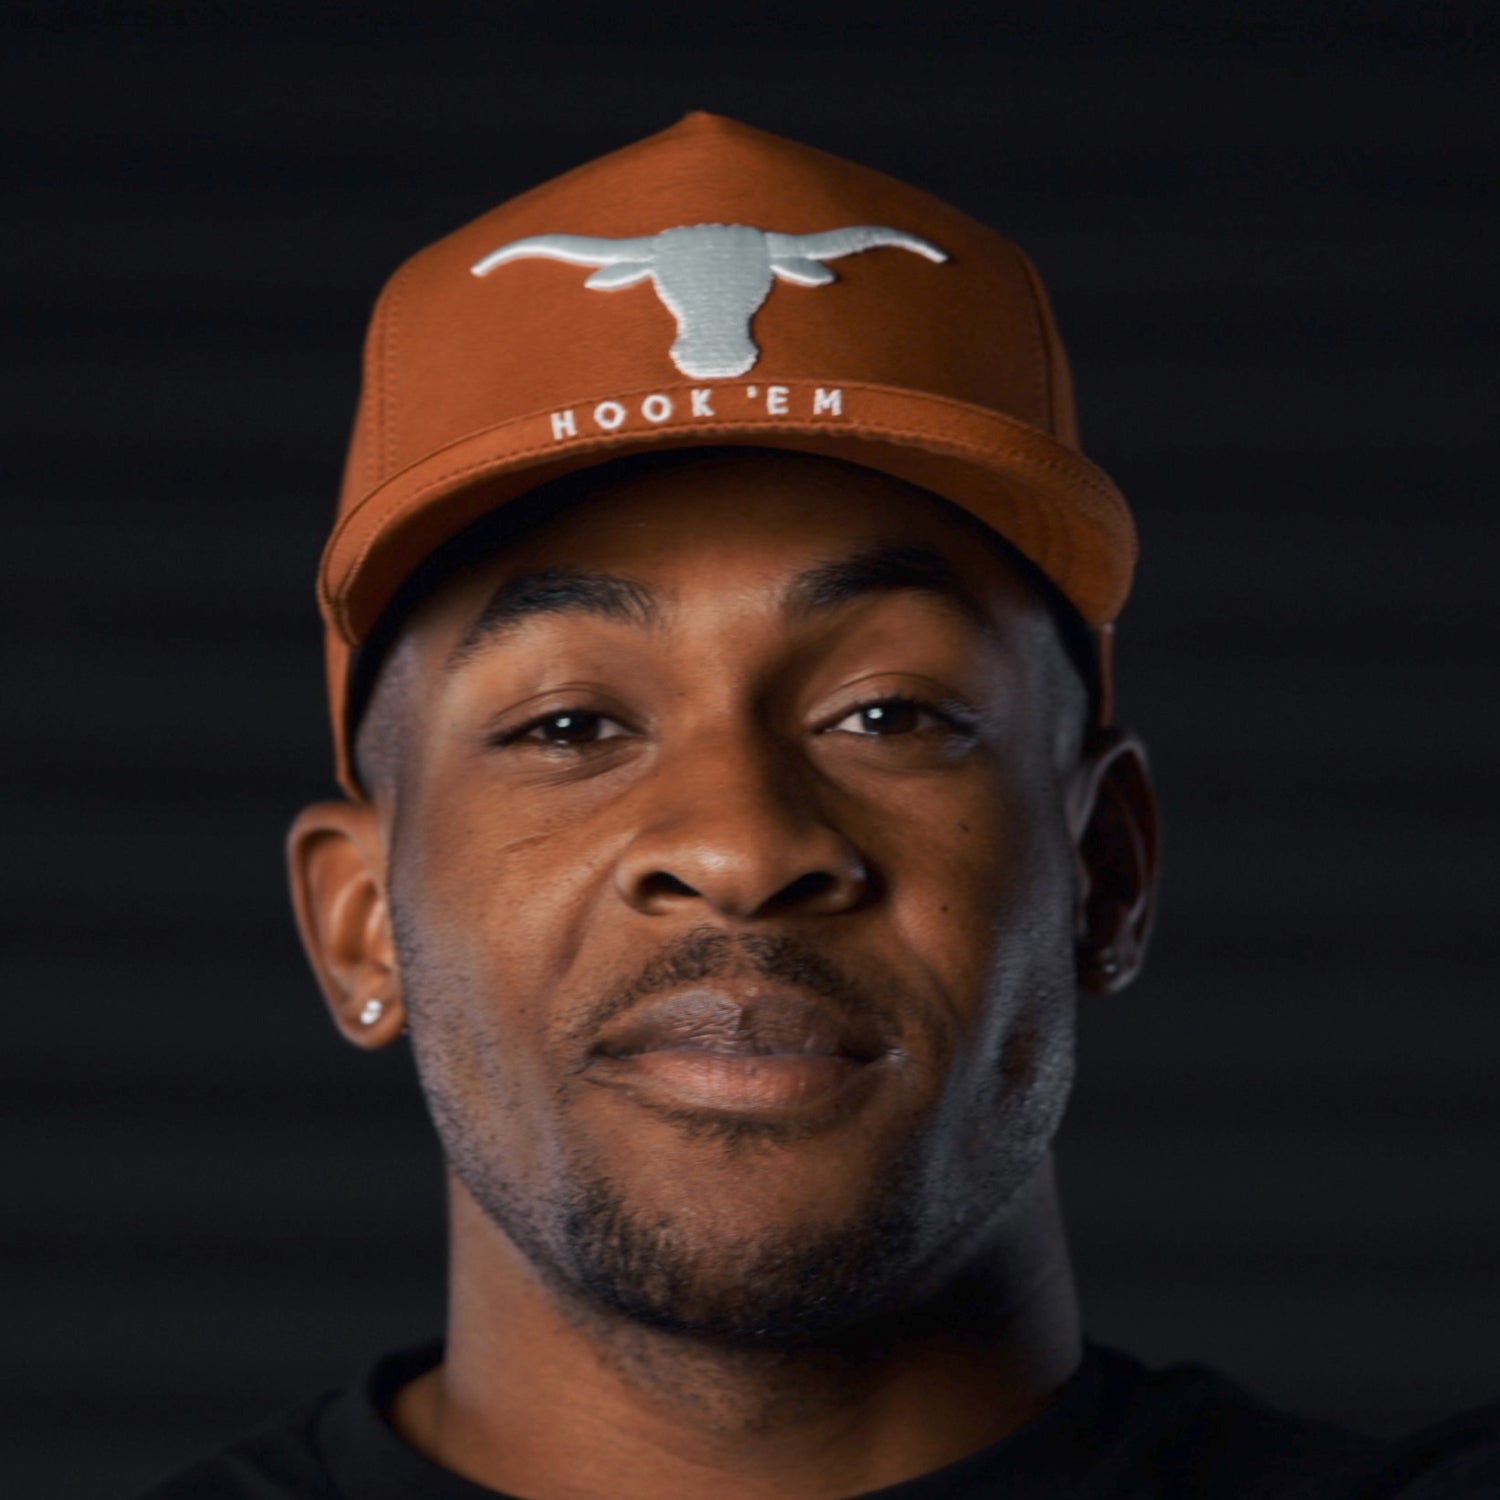 Texas Longhorns $Bill Hat